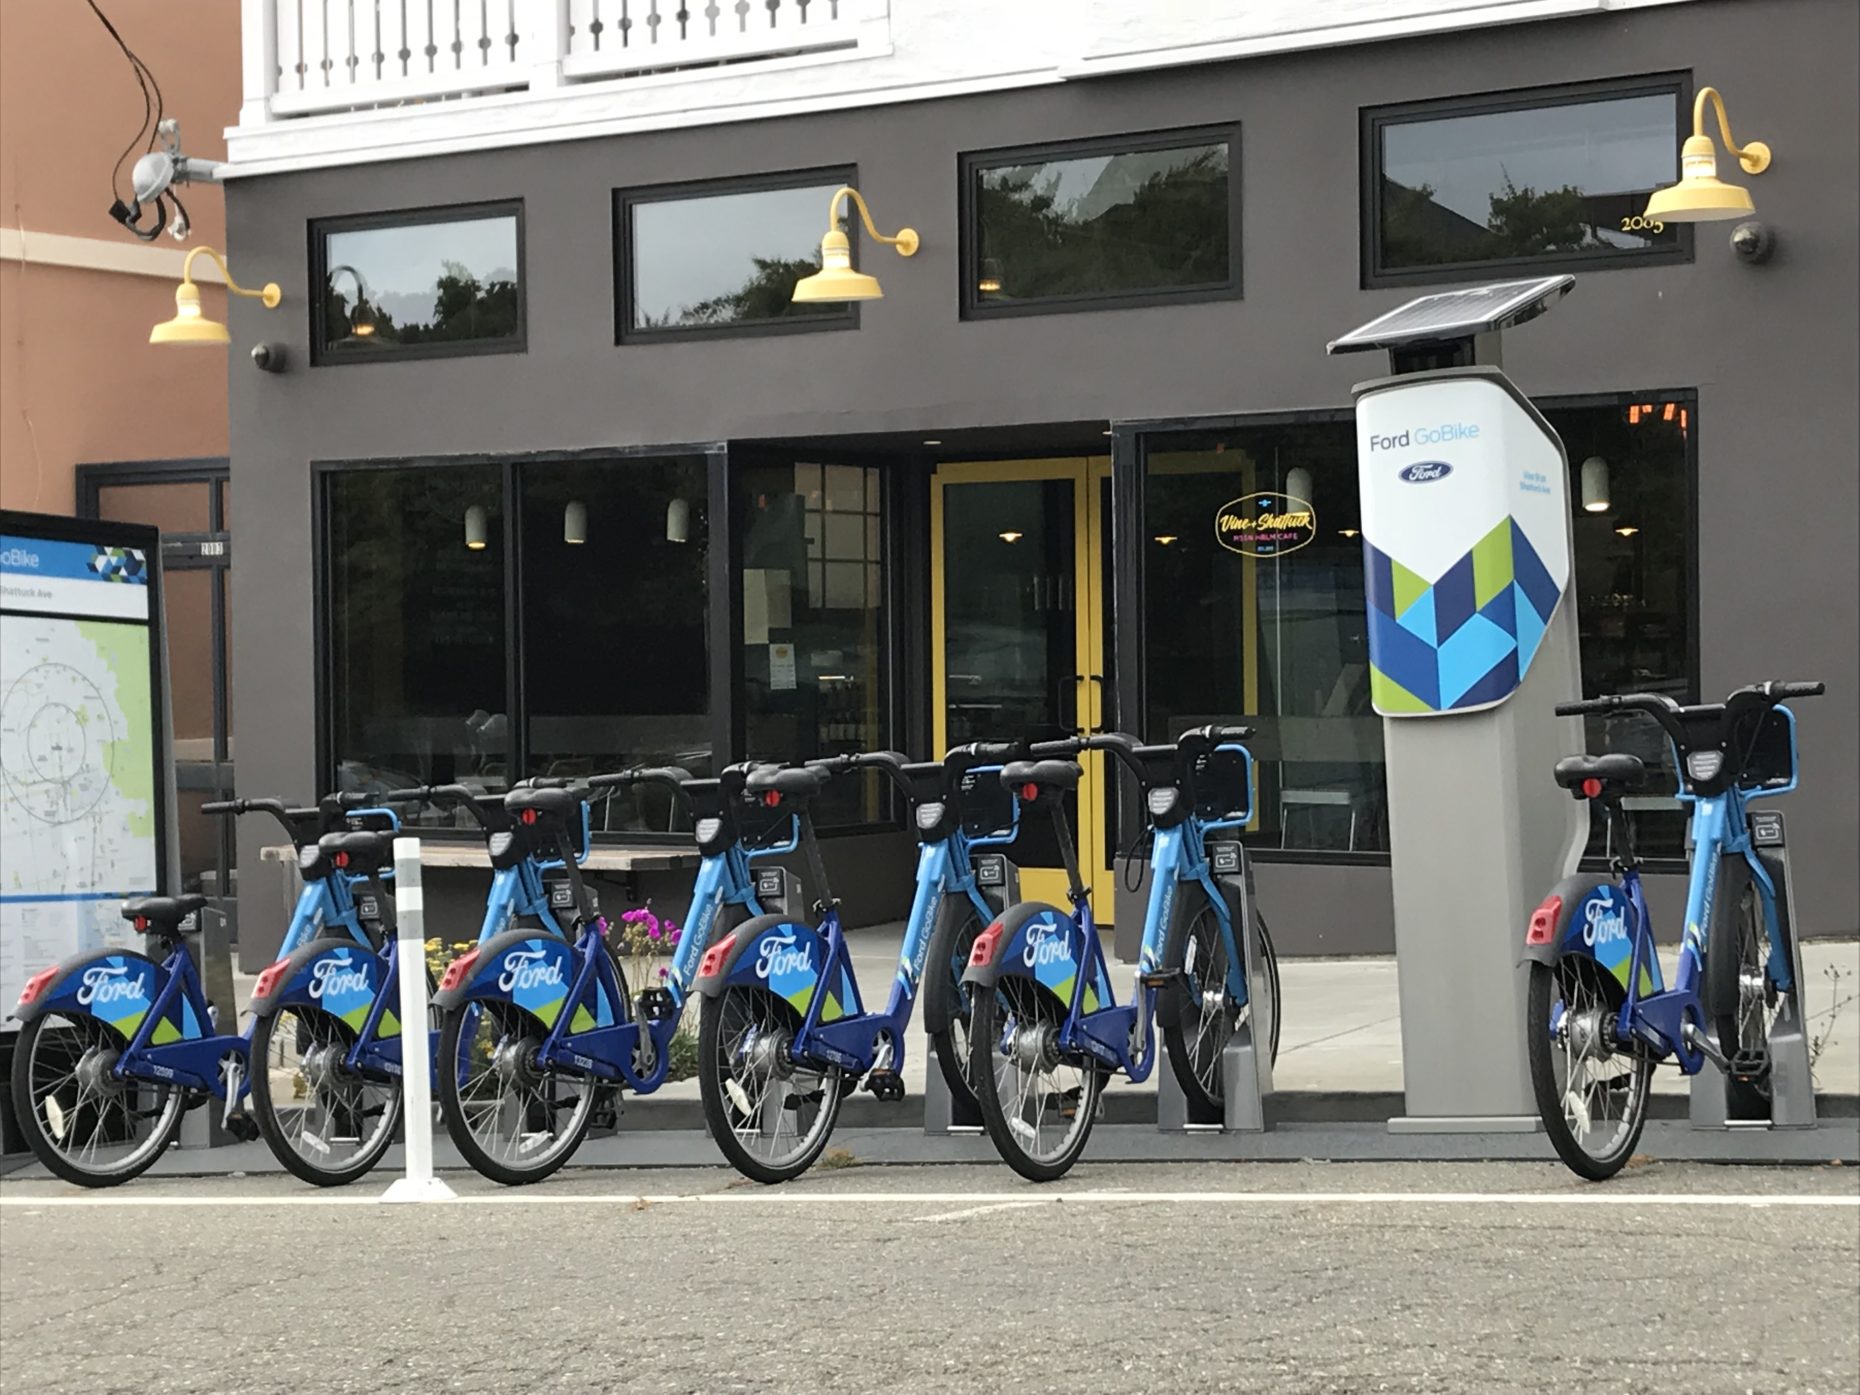 Blue bicycles at bike rental self-serve stand